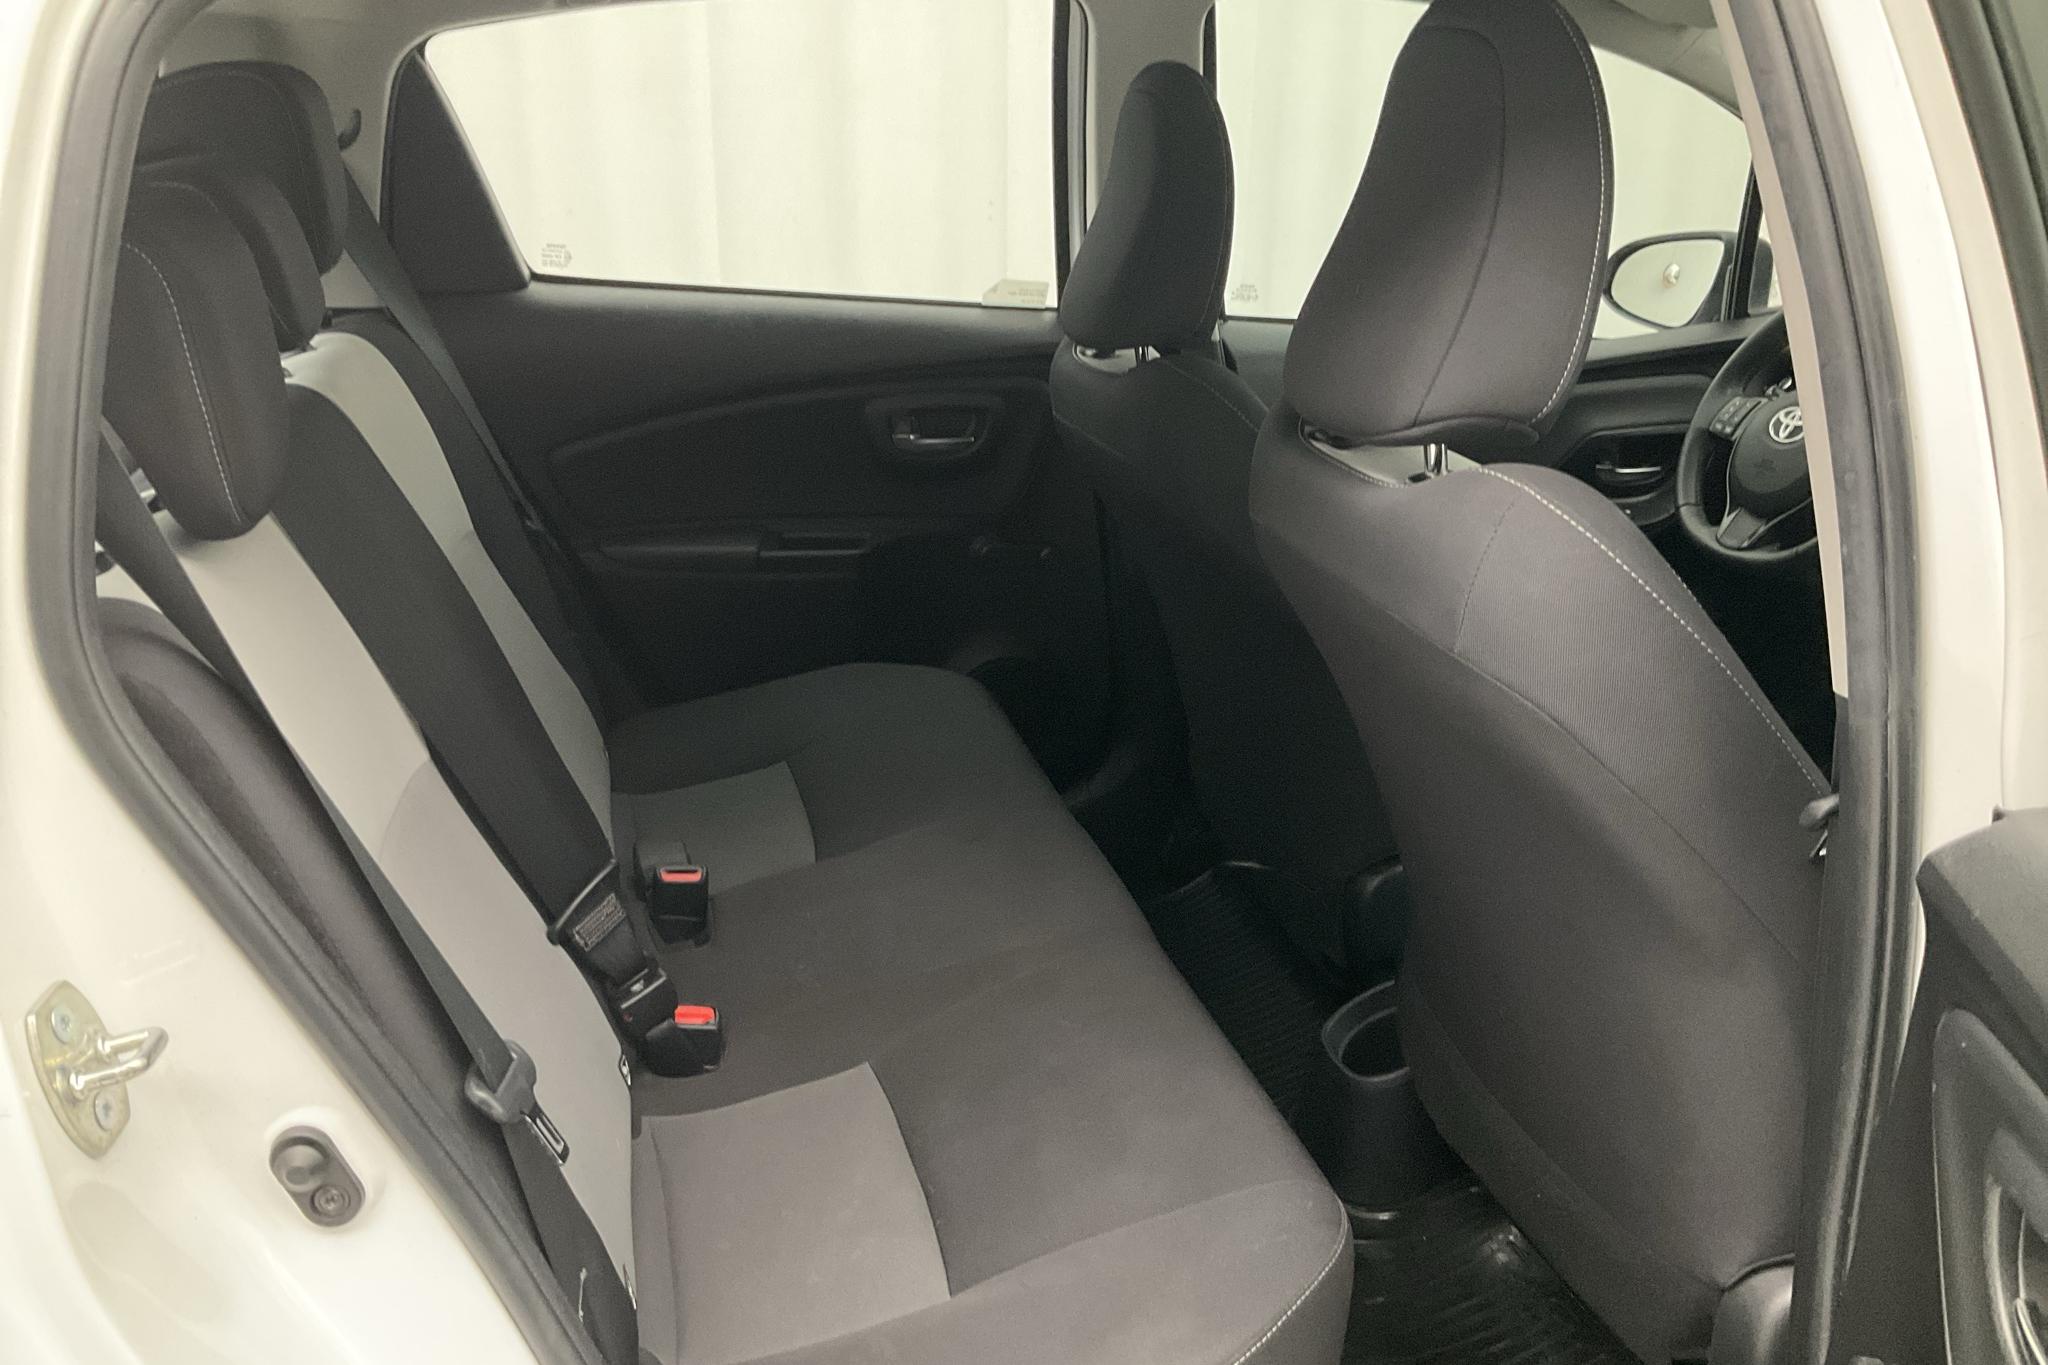 Toyota Yaris 1.5 5dr (111hk) - 95 170 km - Manual - white - 2018